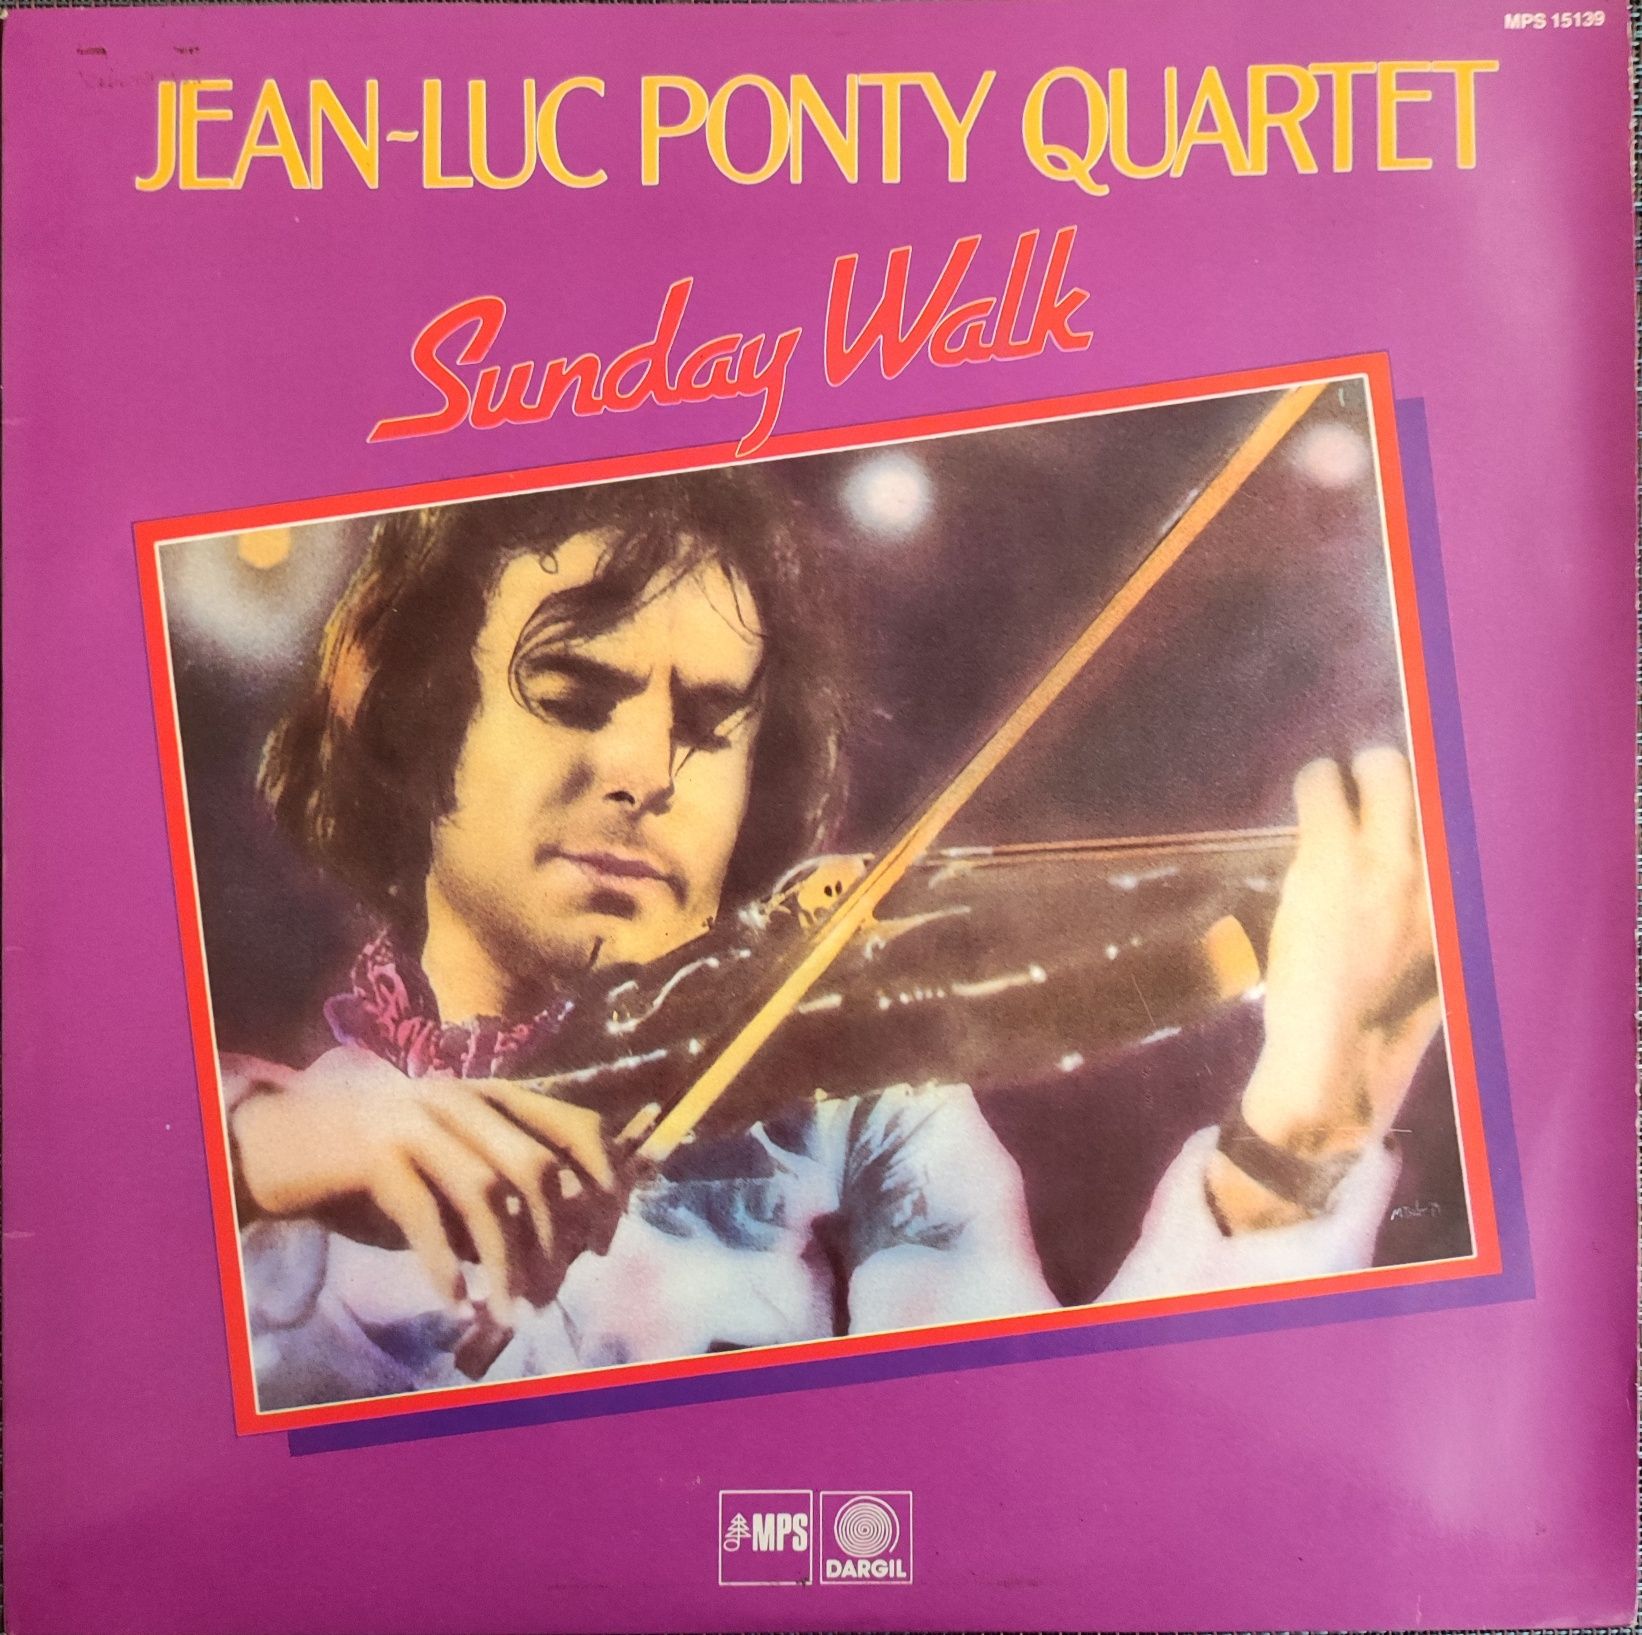 Jean-Luk Ponty Quartet " Sunday Walk"